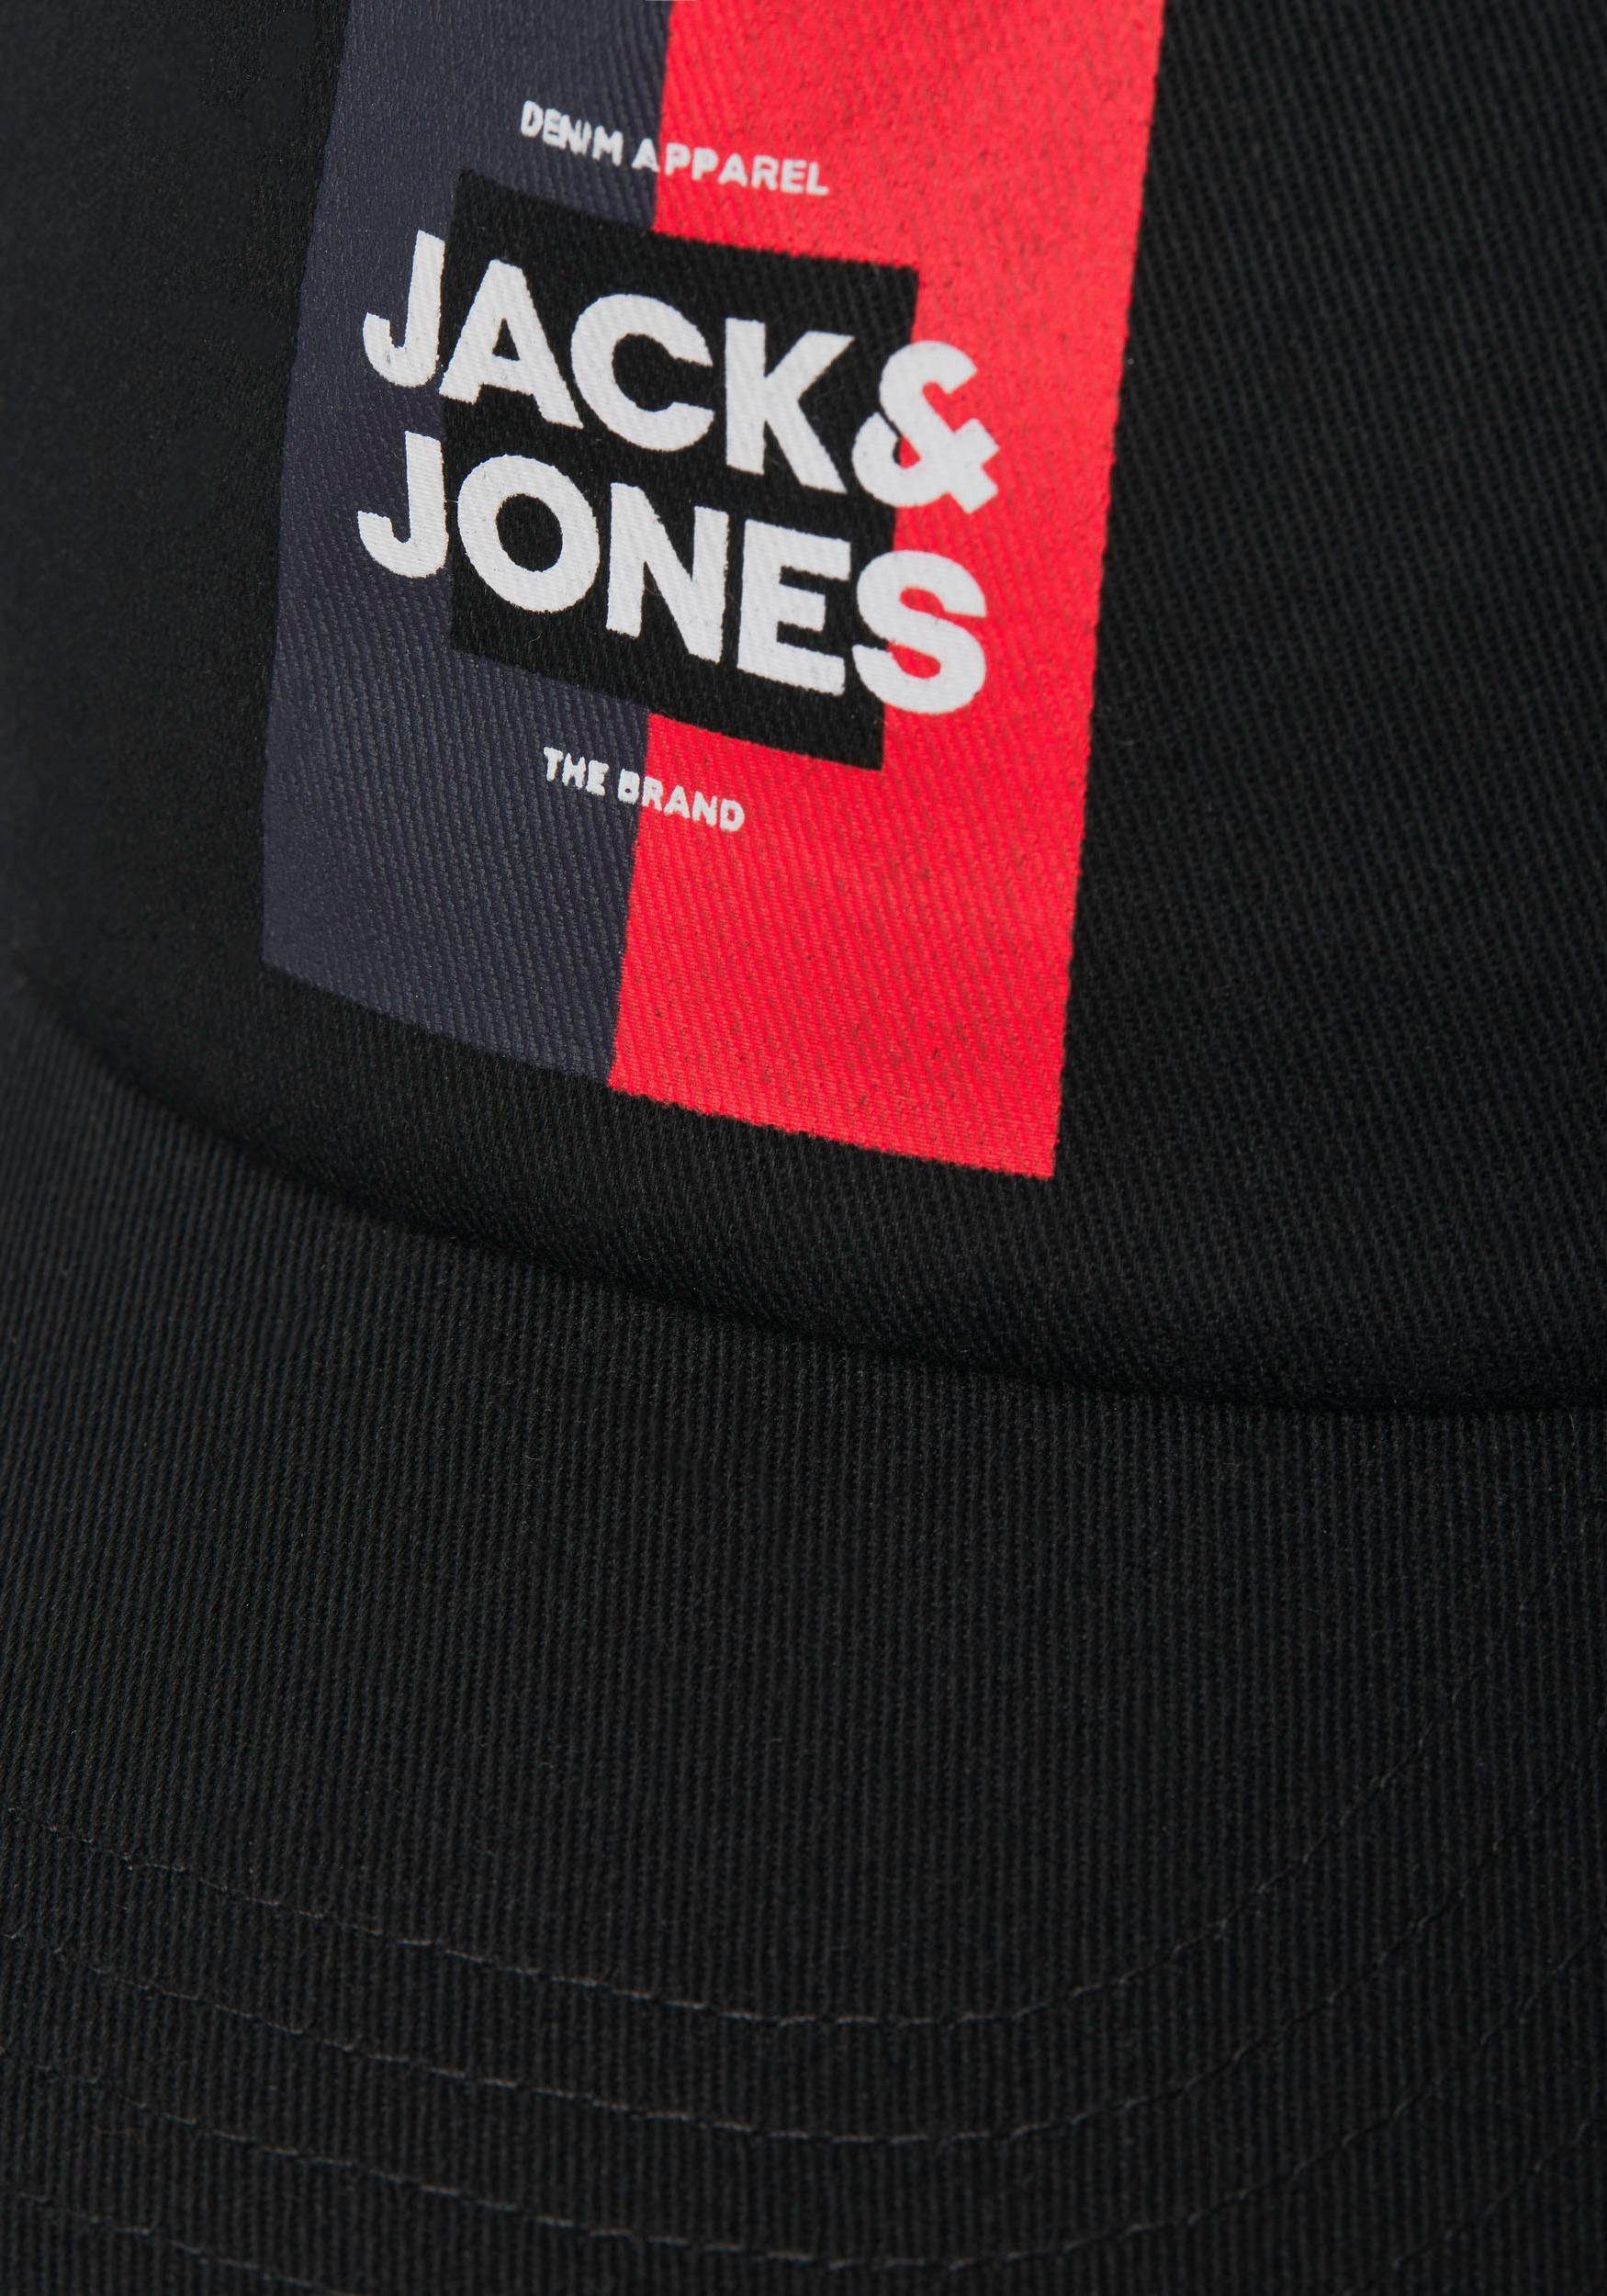 Cap Jones JACOSCAR & CAP Jack Baseball